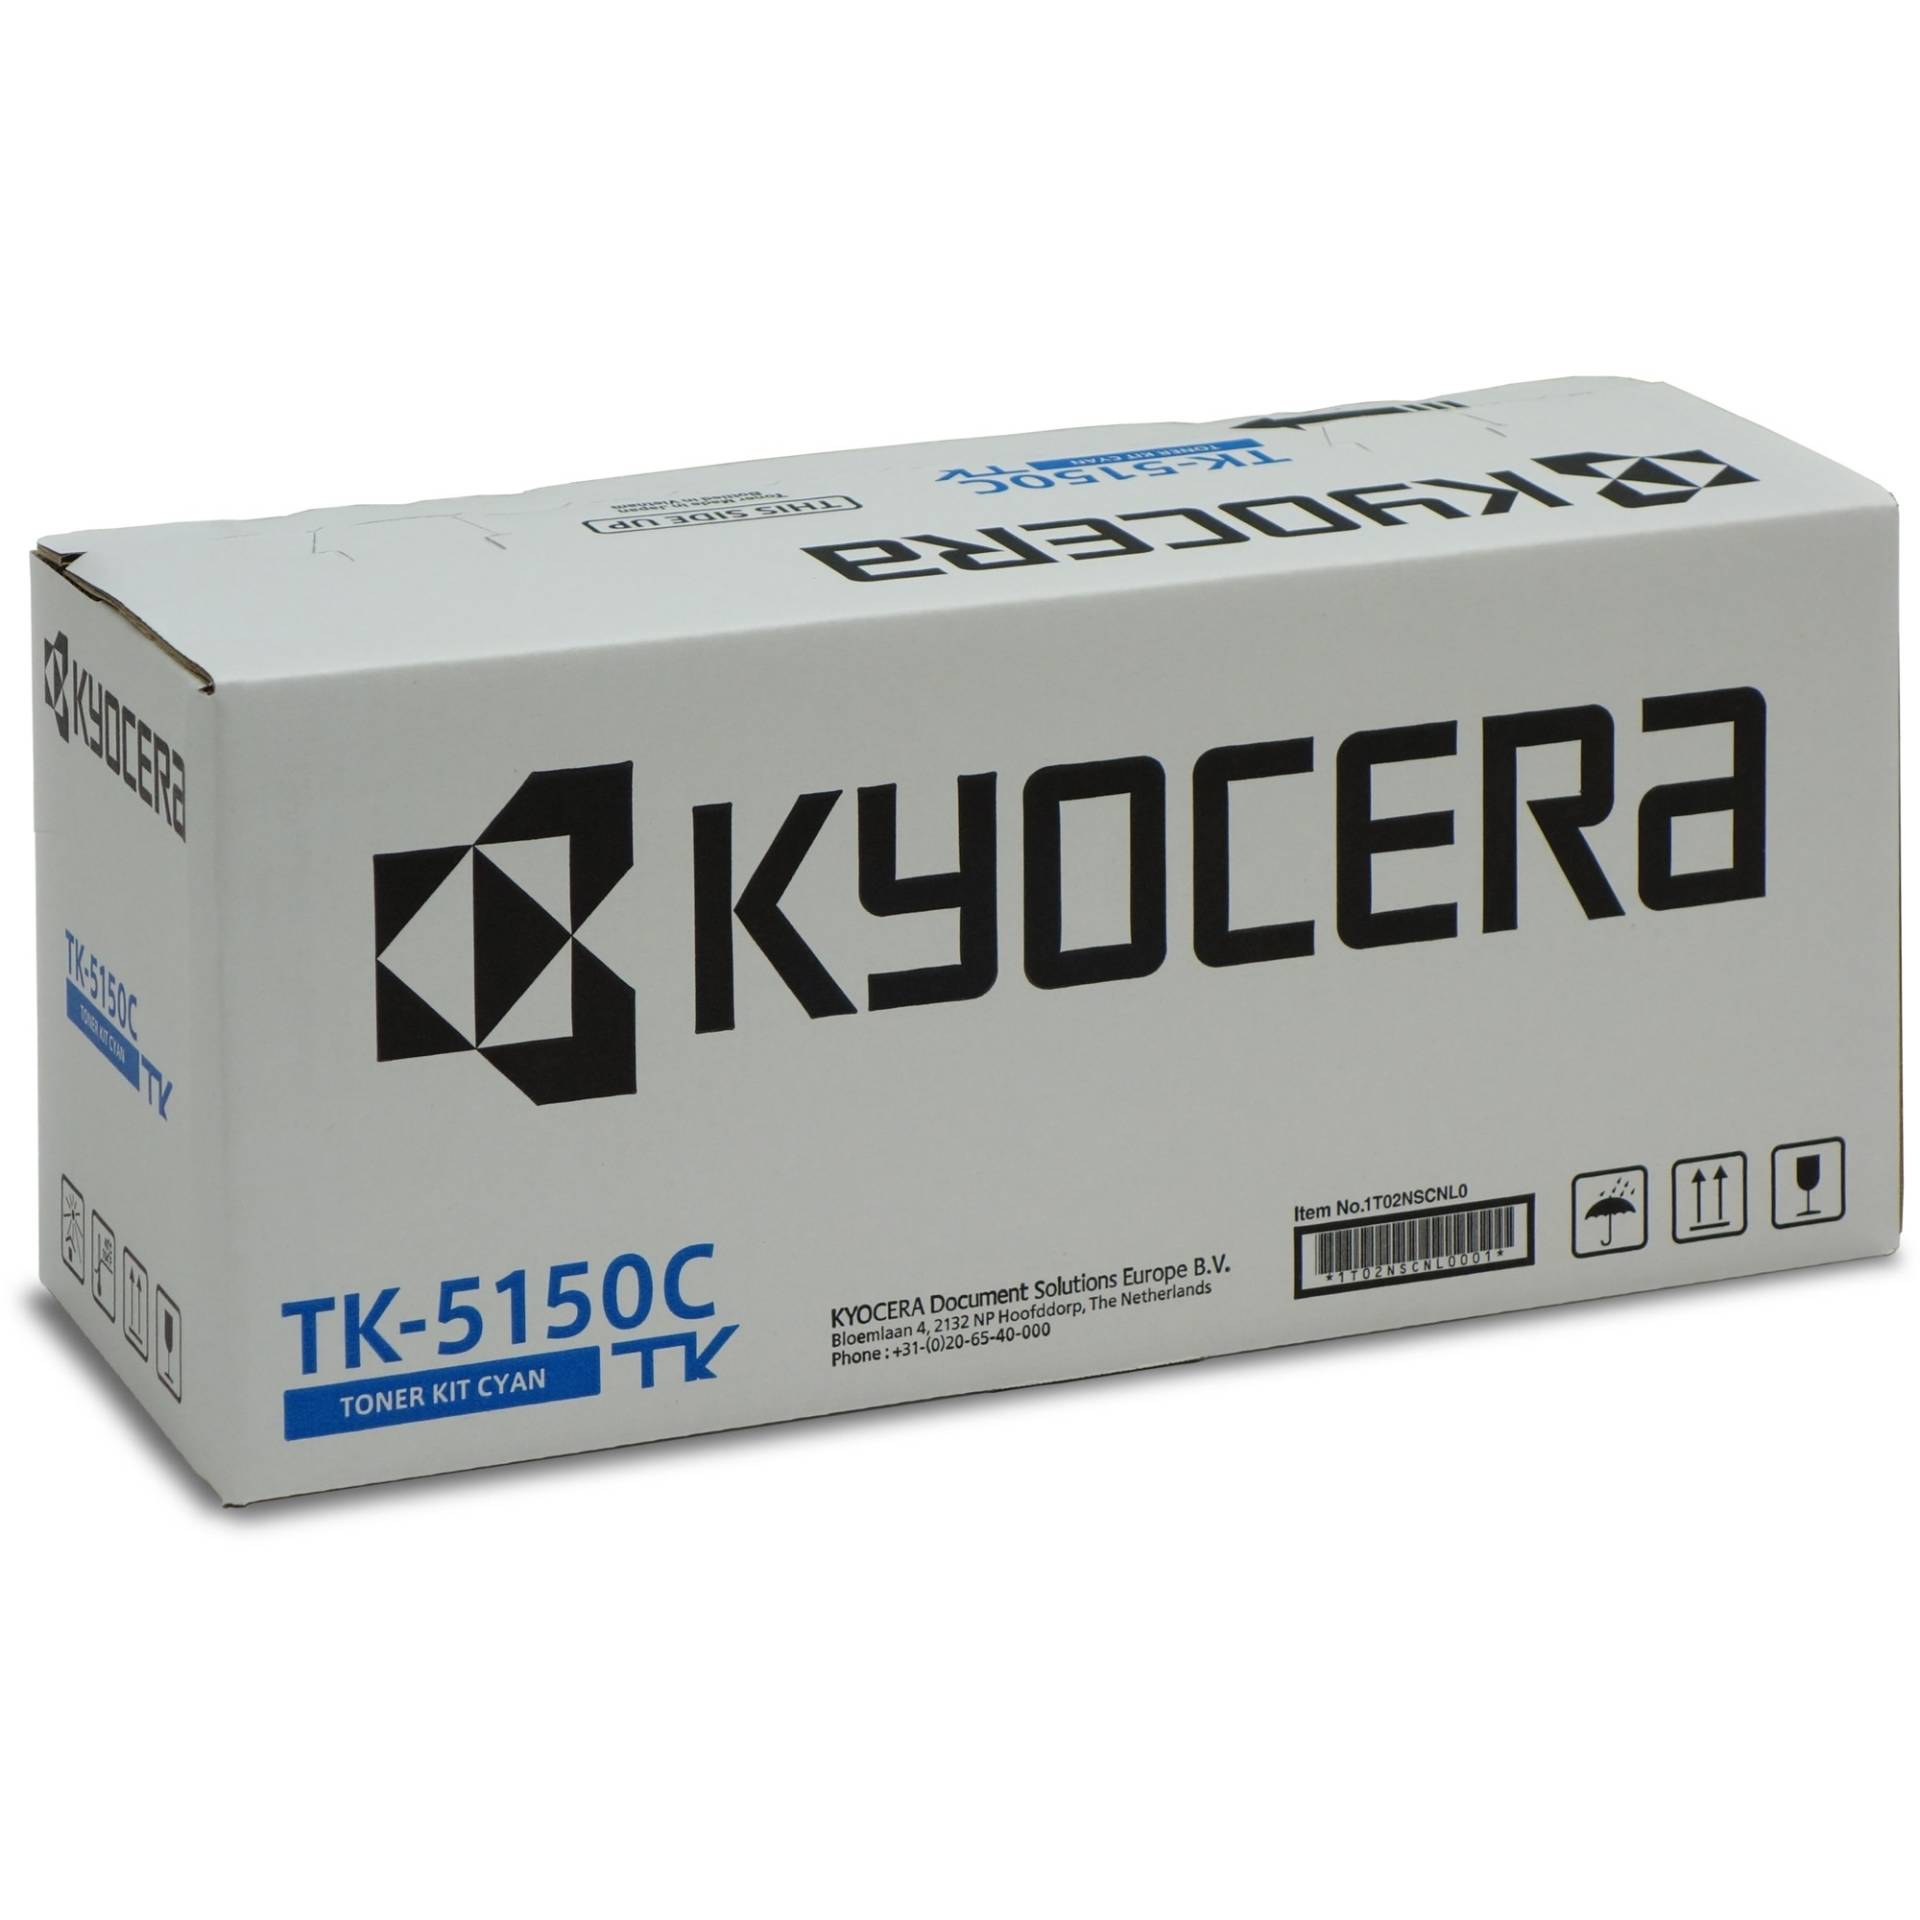 Toner cyan TK-5150C von Kyocera